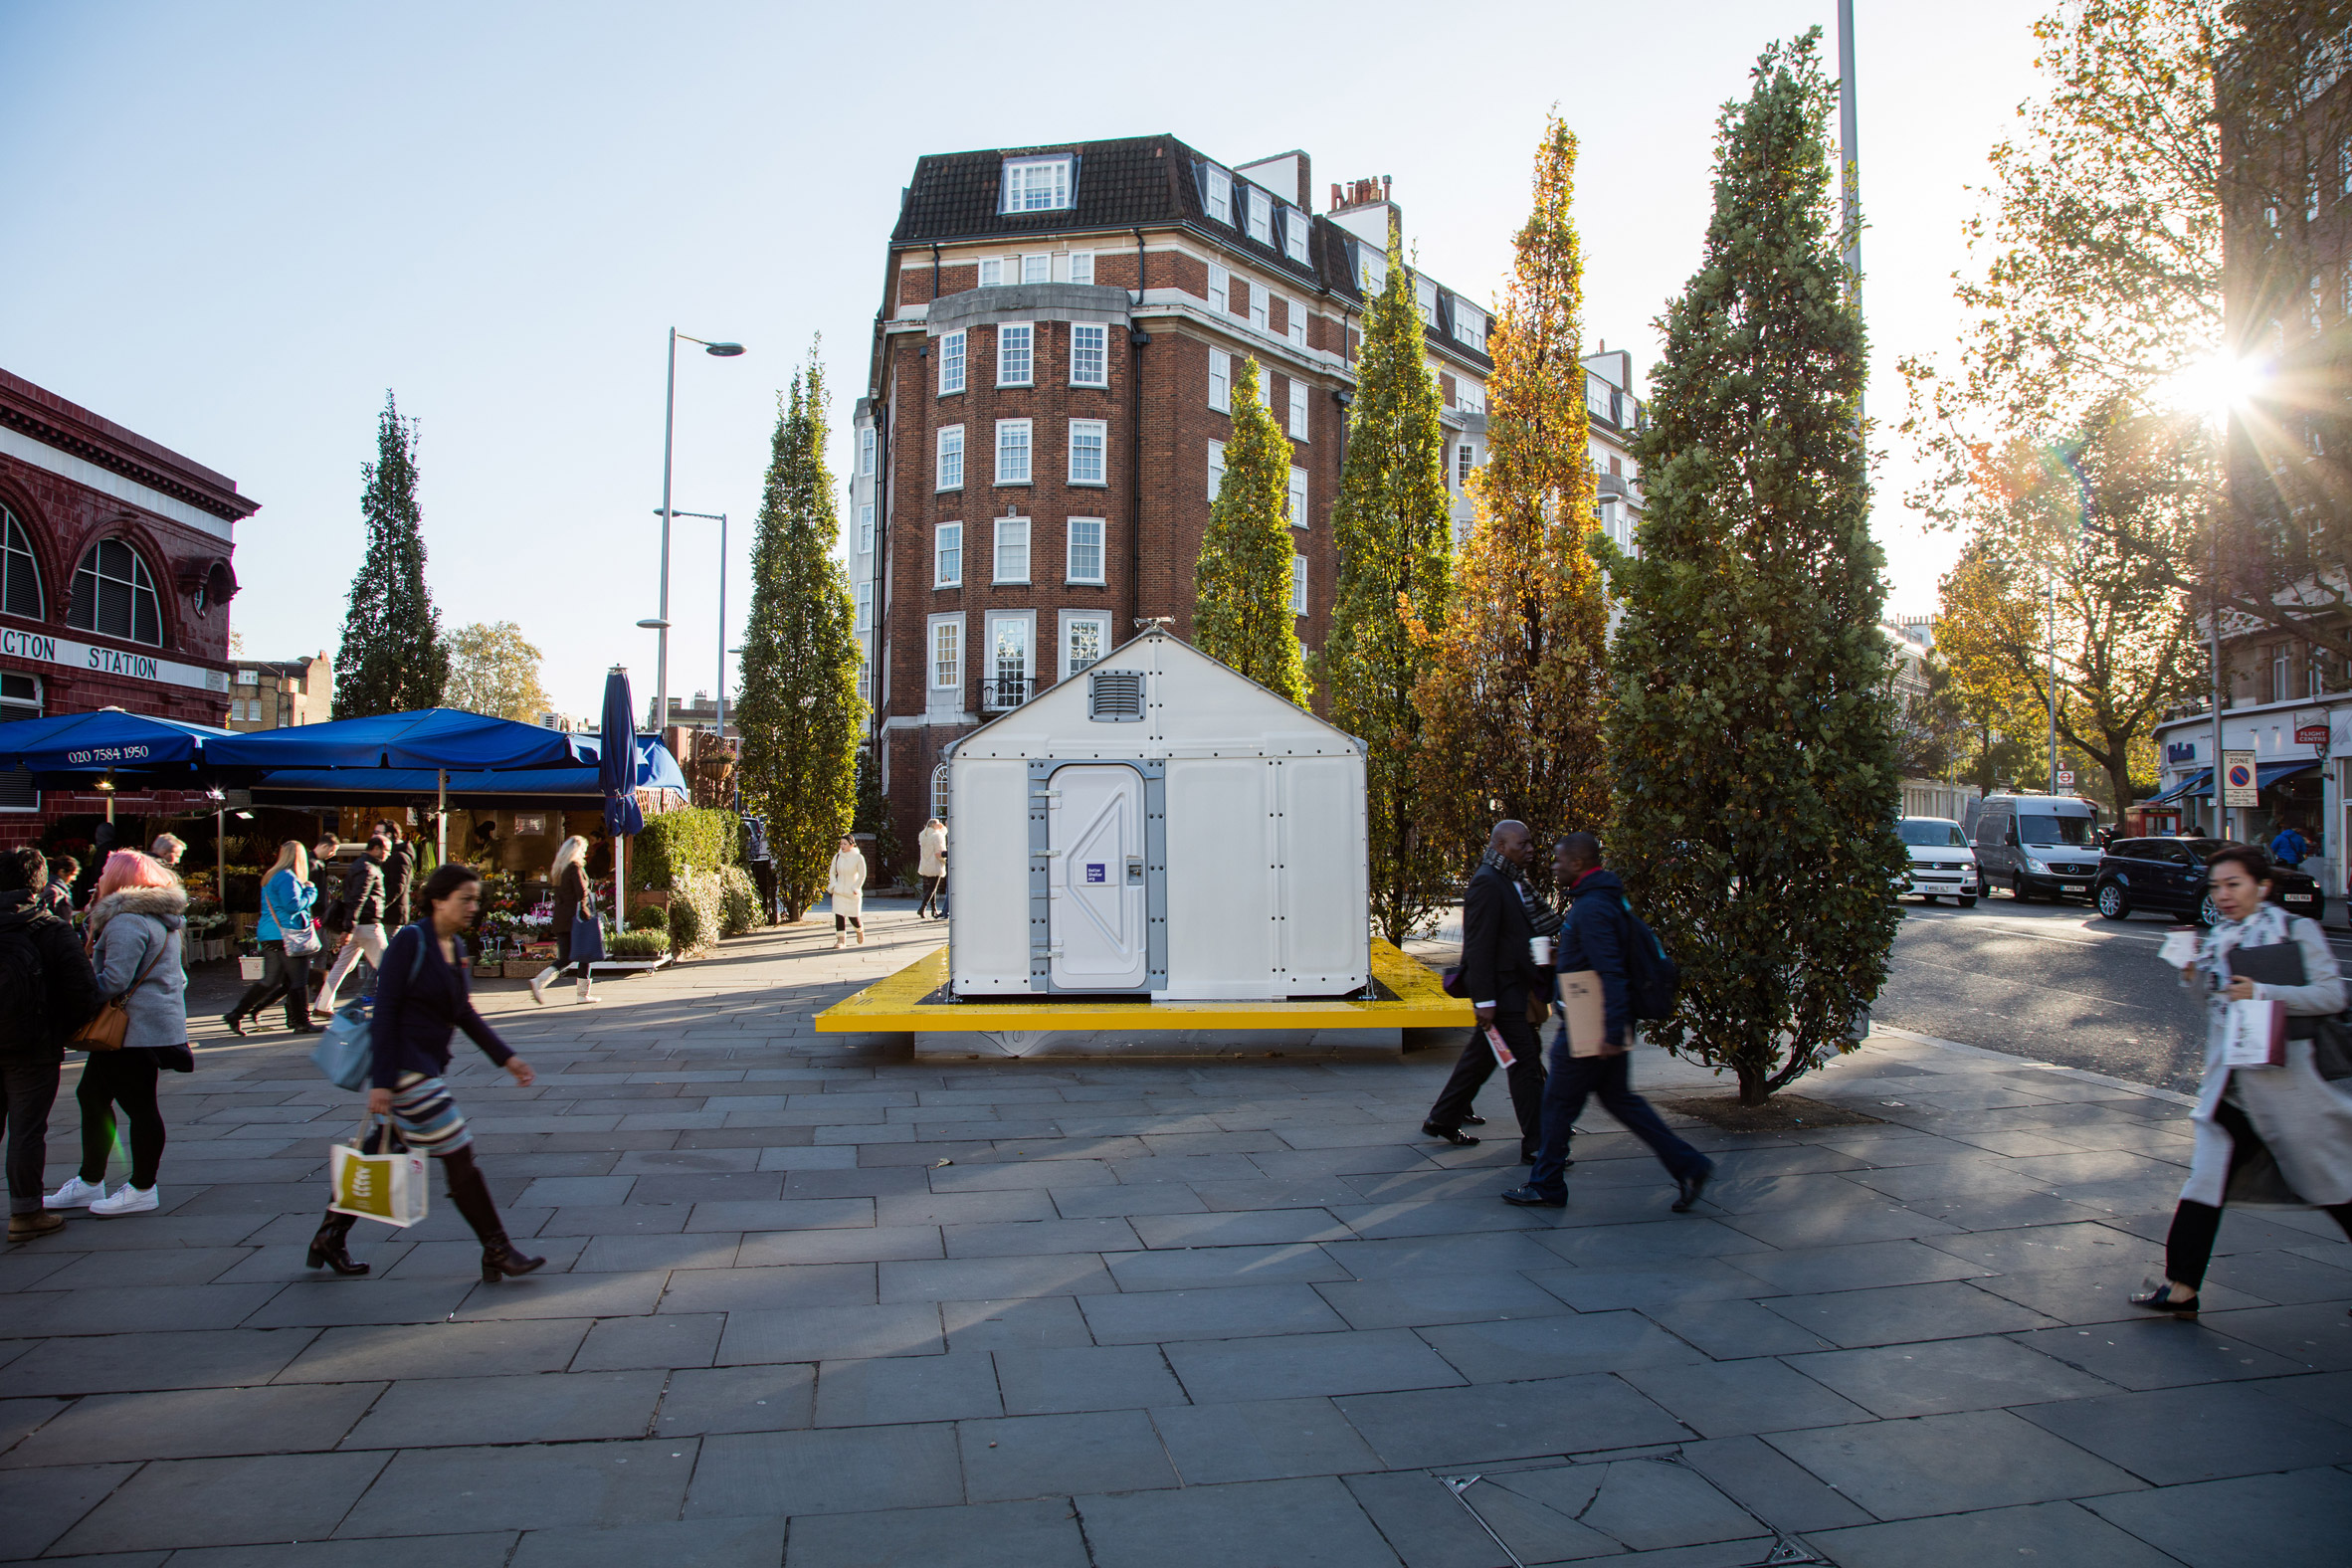 Design Museum installs IKEA refugee shelter on London streets